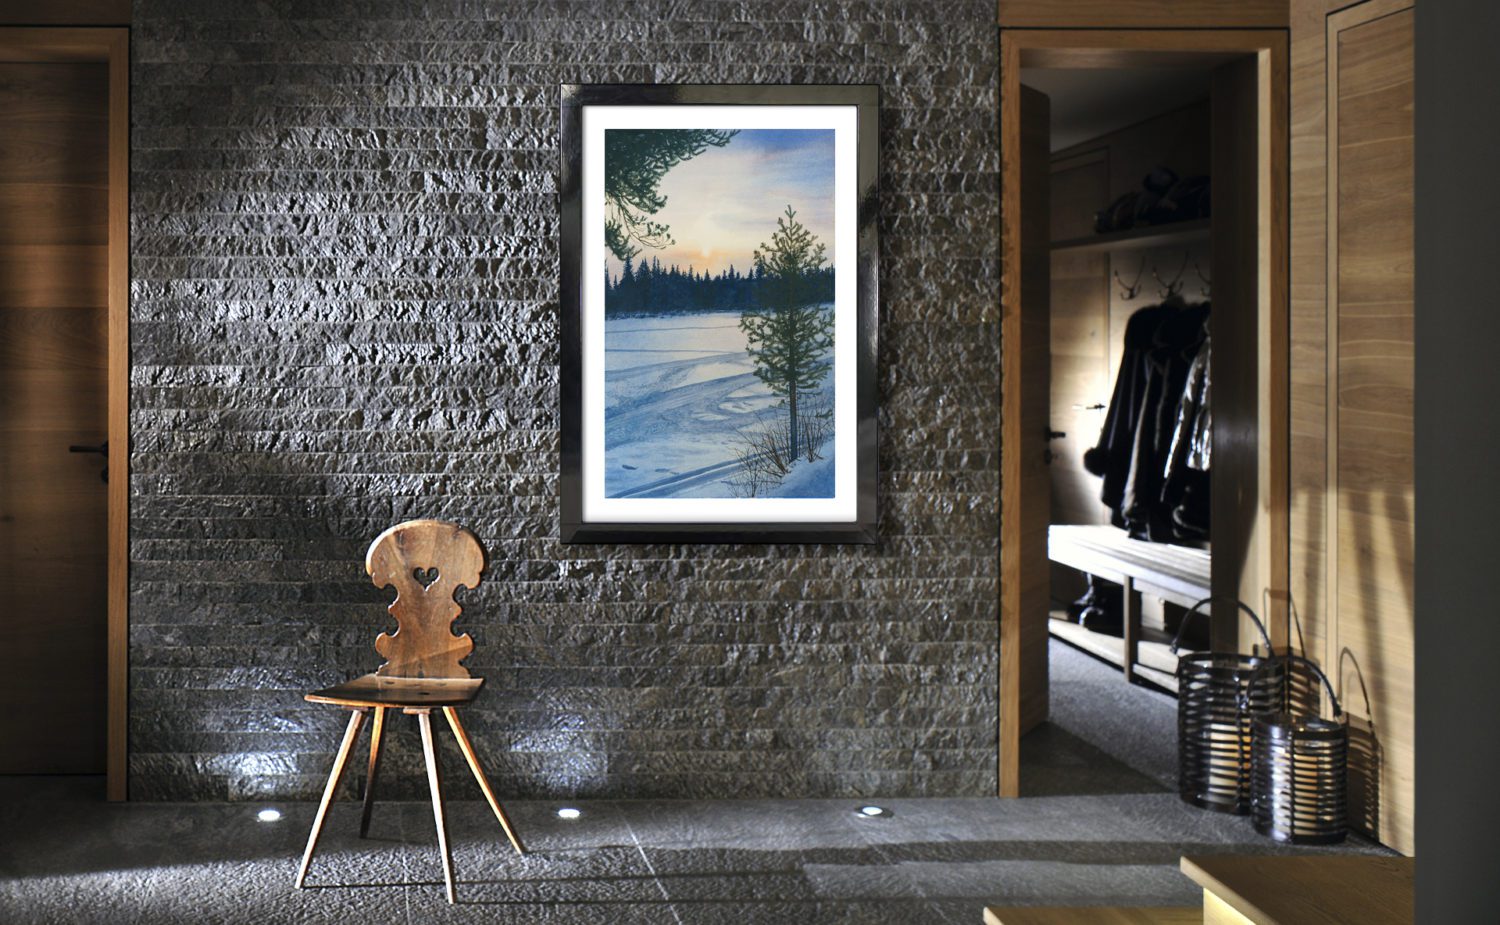 Sweden Lapland Attew Painting Landscape artist art Ray Mears Bushcraft winter Snow konst lavvu Vinter Swedish